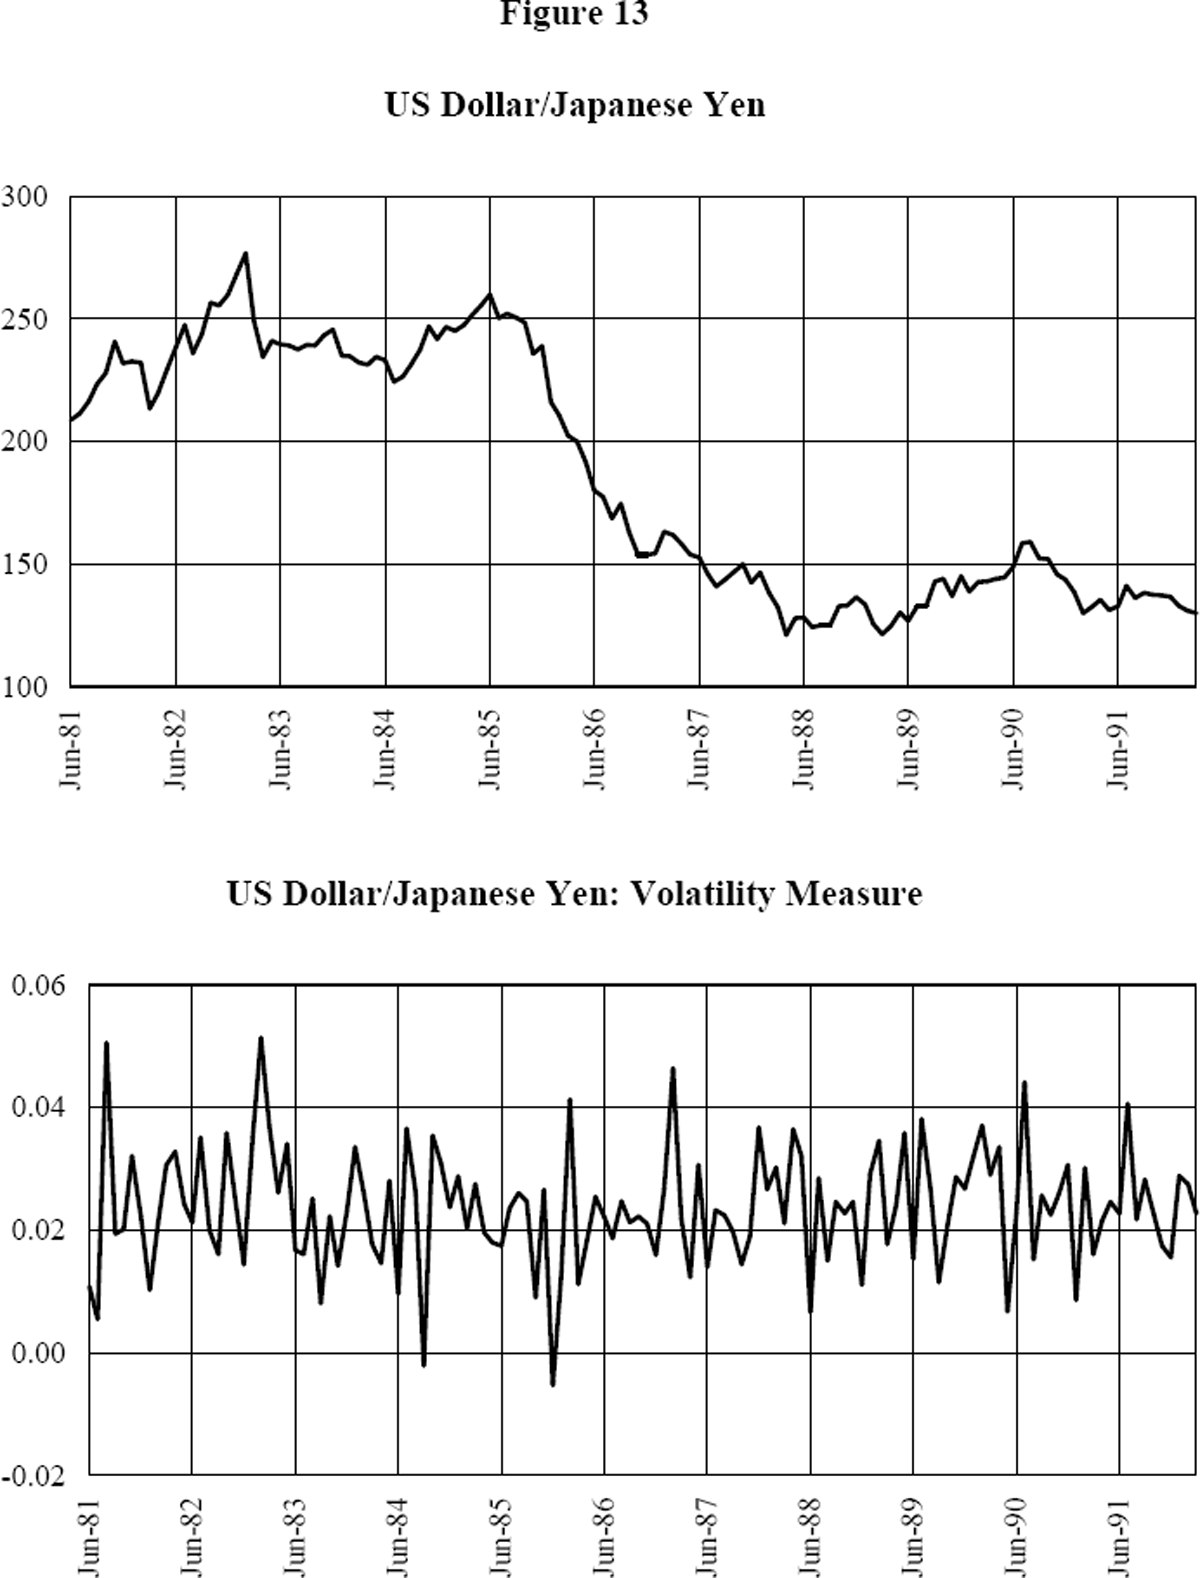 Figure 13: US Dollar/Japanese Yen and Volatility Measure